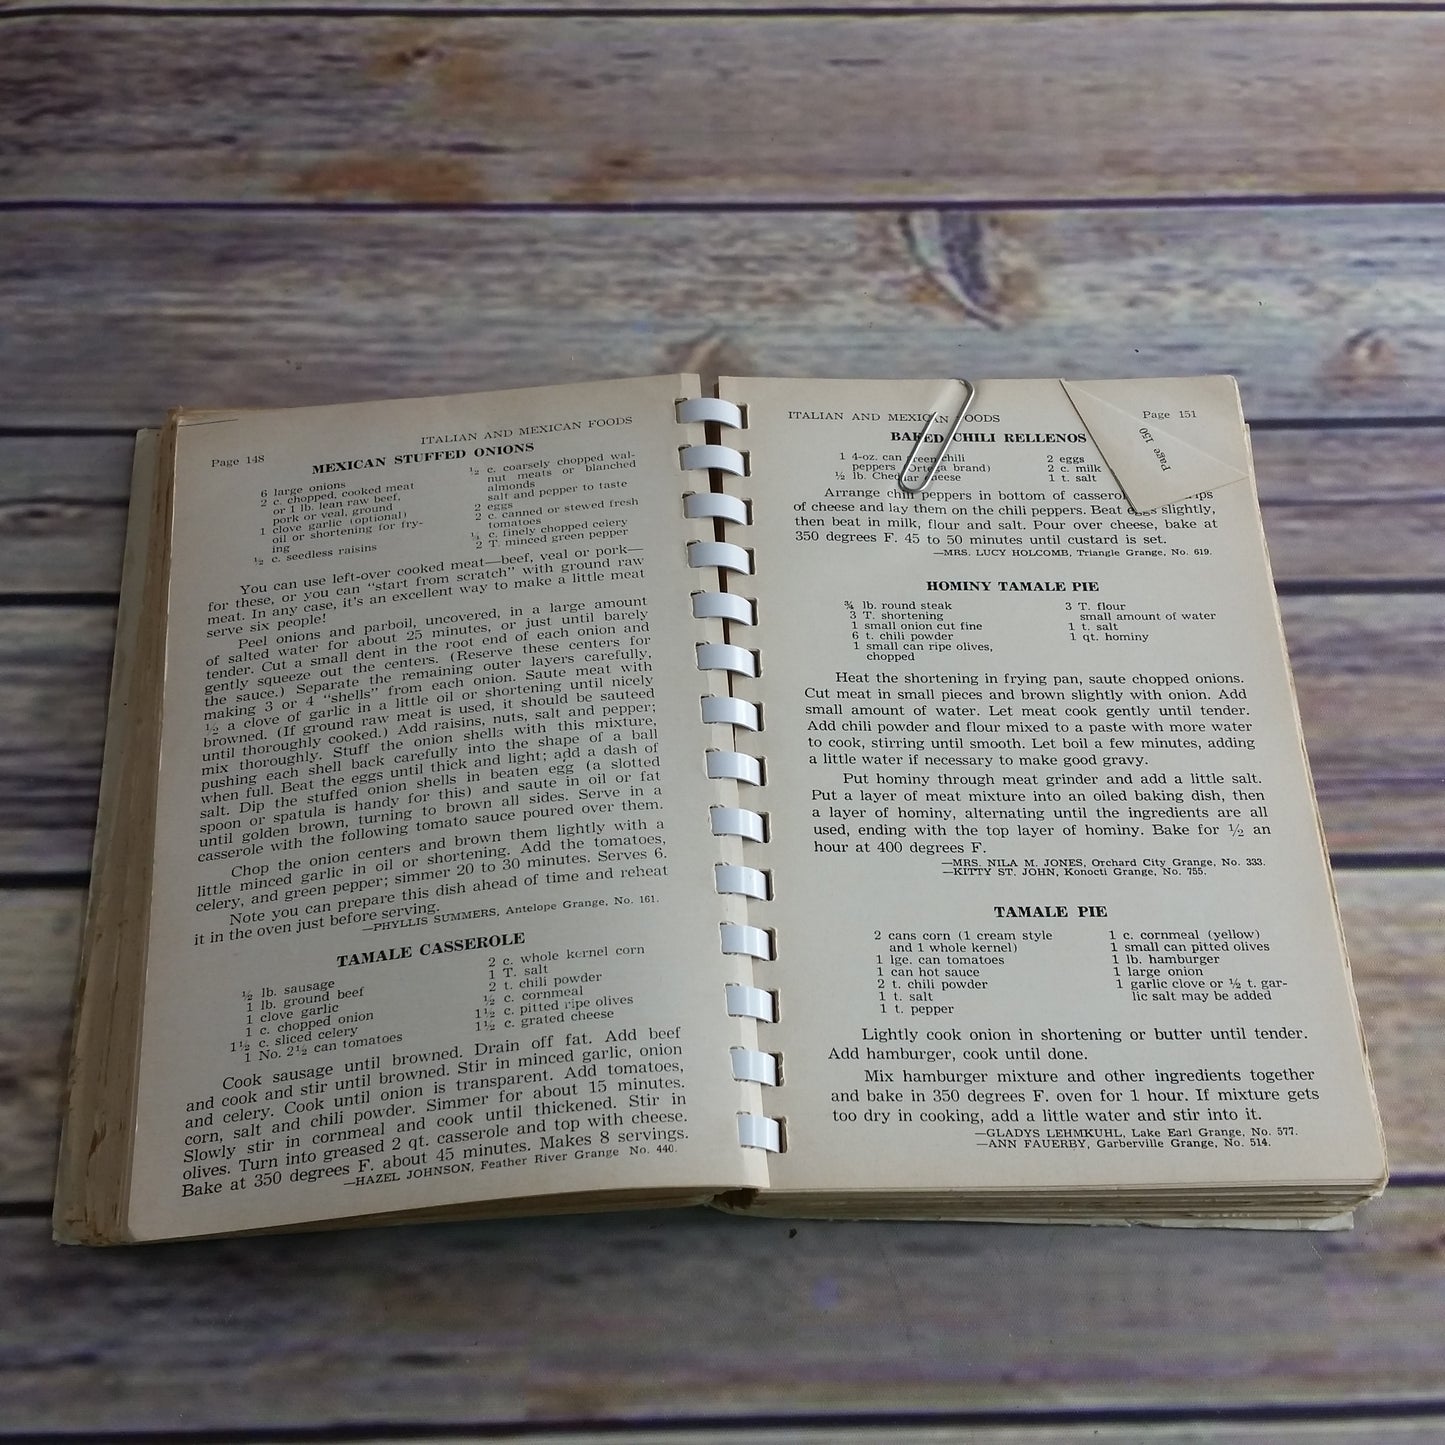 Vintage California Cookbook State Grange Recipes Our Favorite Grange Recipe 1963 Spiral Bound Paperback